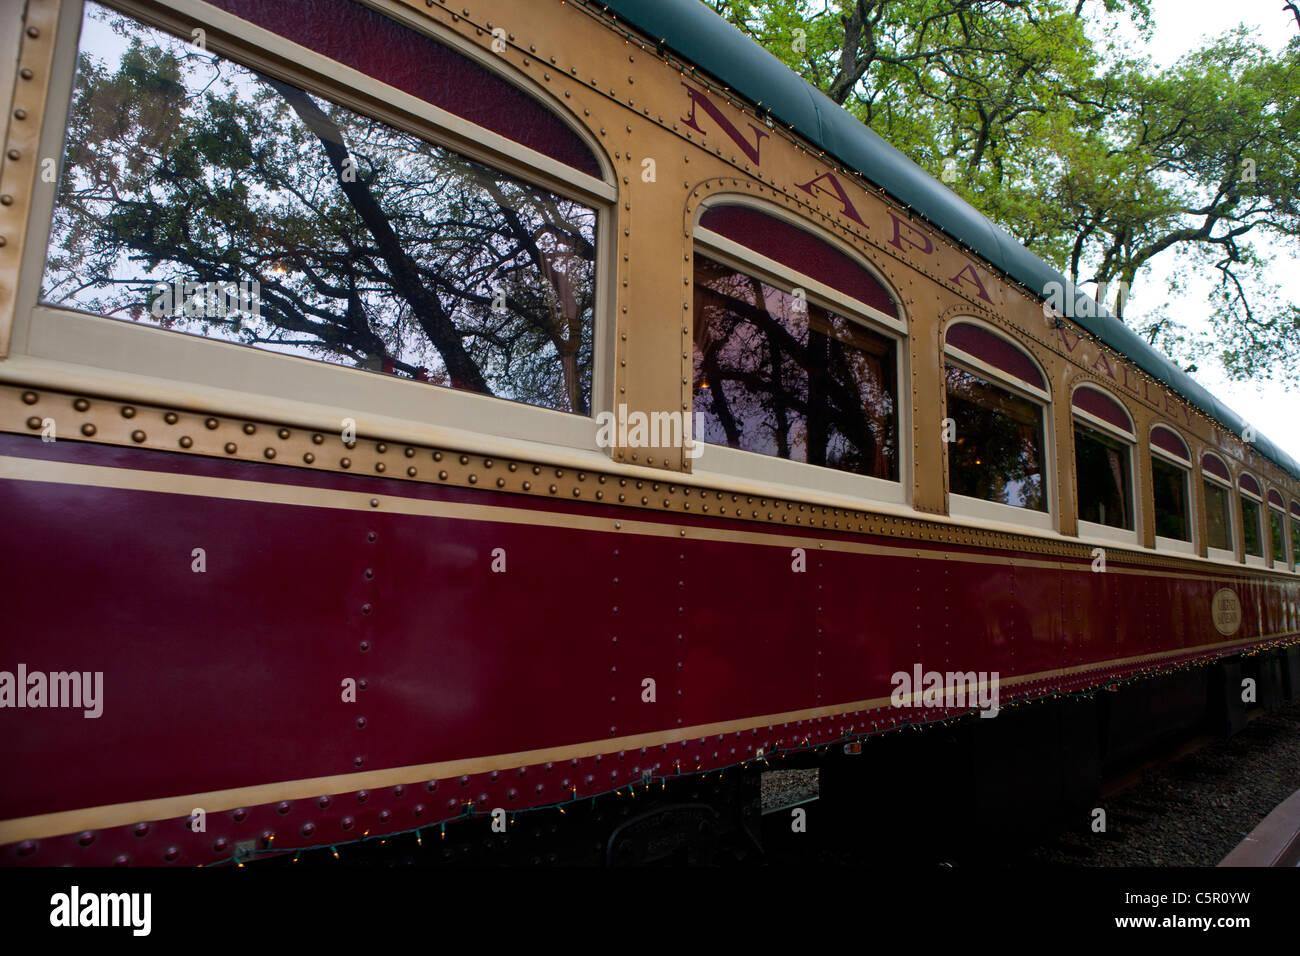 Exterior of the Napa Valley Wine Train, Napa, California, United States of America Stock Photo